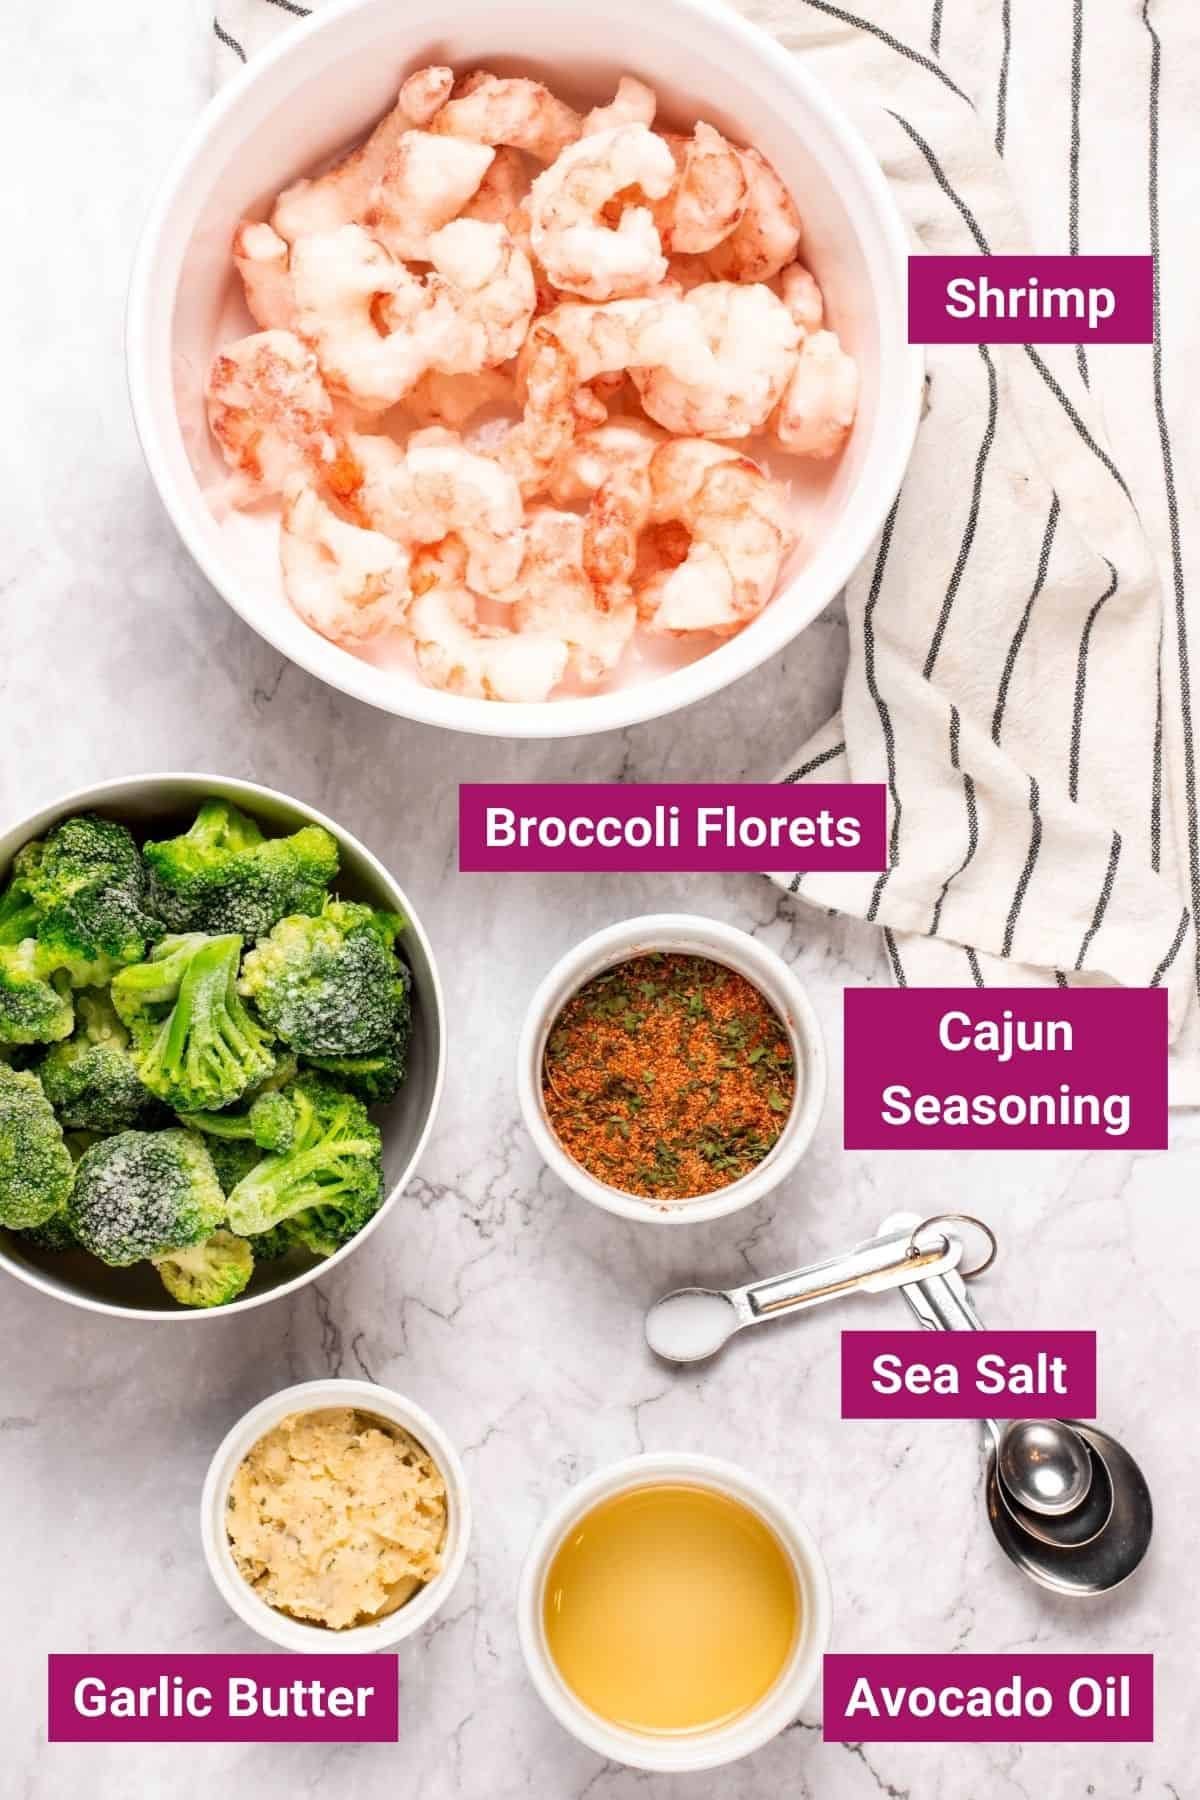 frozen shrimp, broccoli florets, cajun seasoning, garlic butter, sea salt, avocado oil in separate bowls